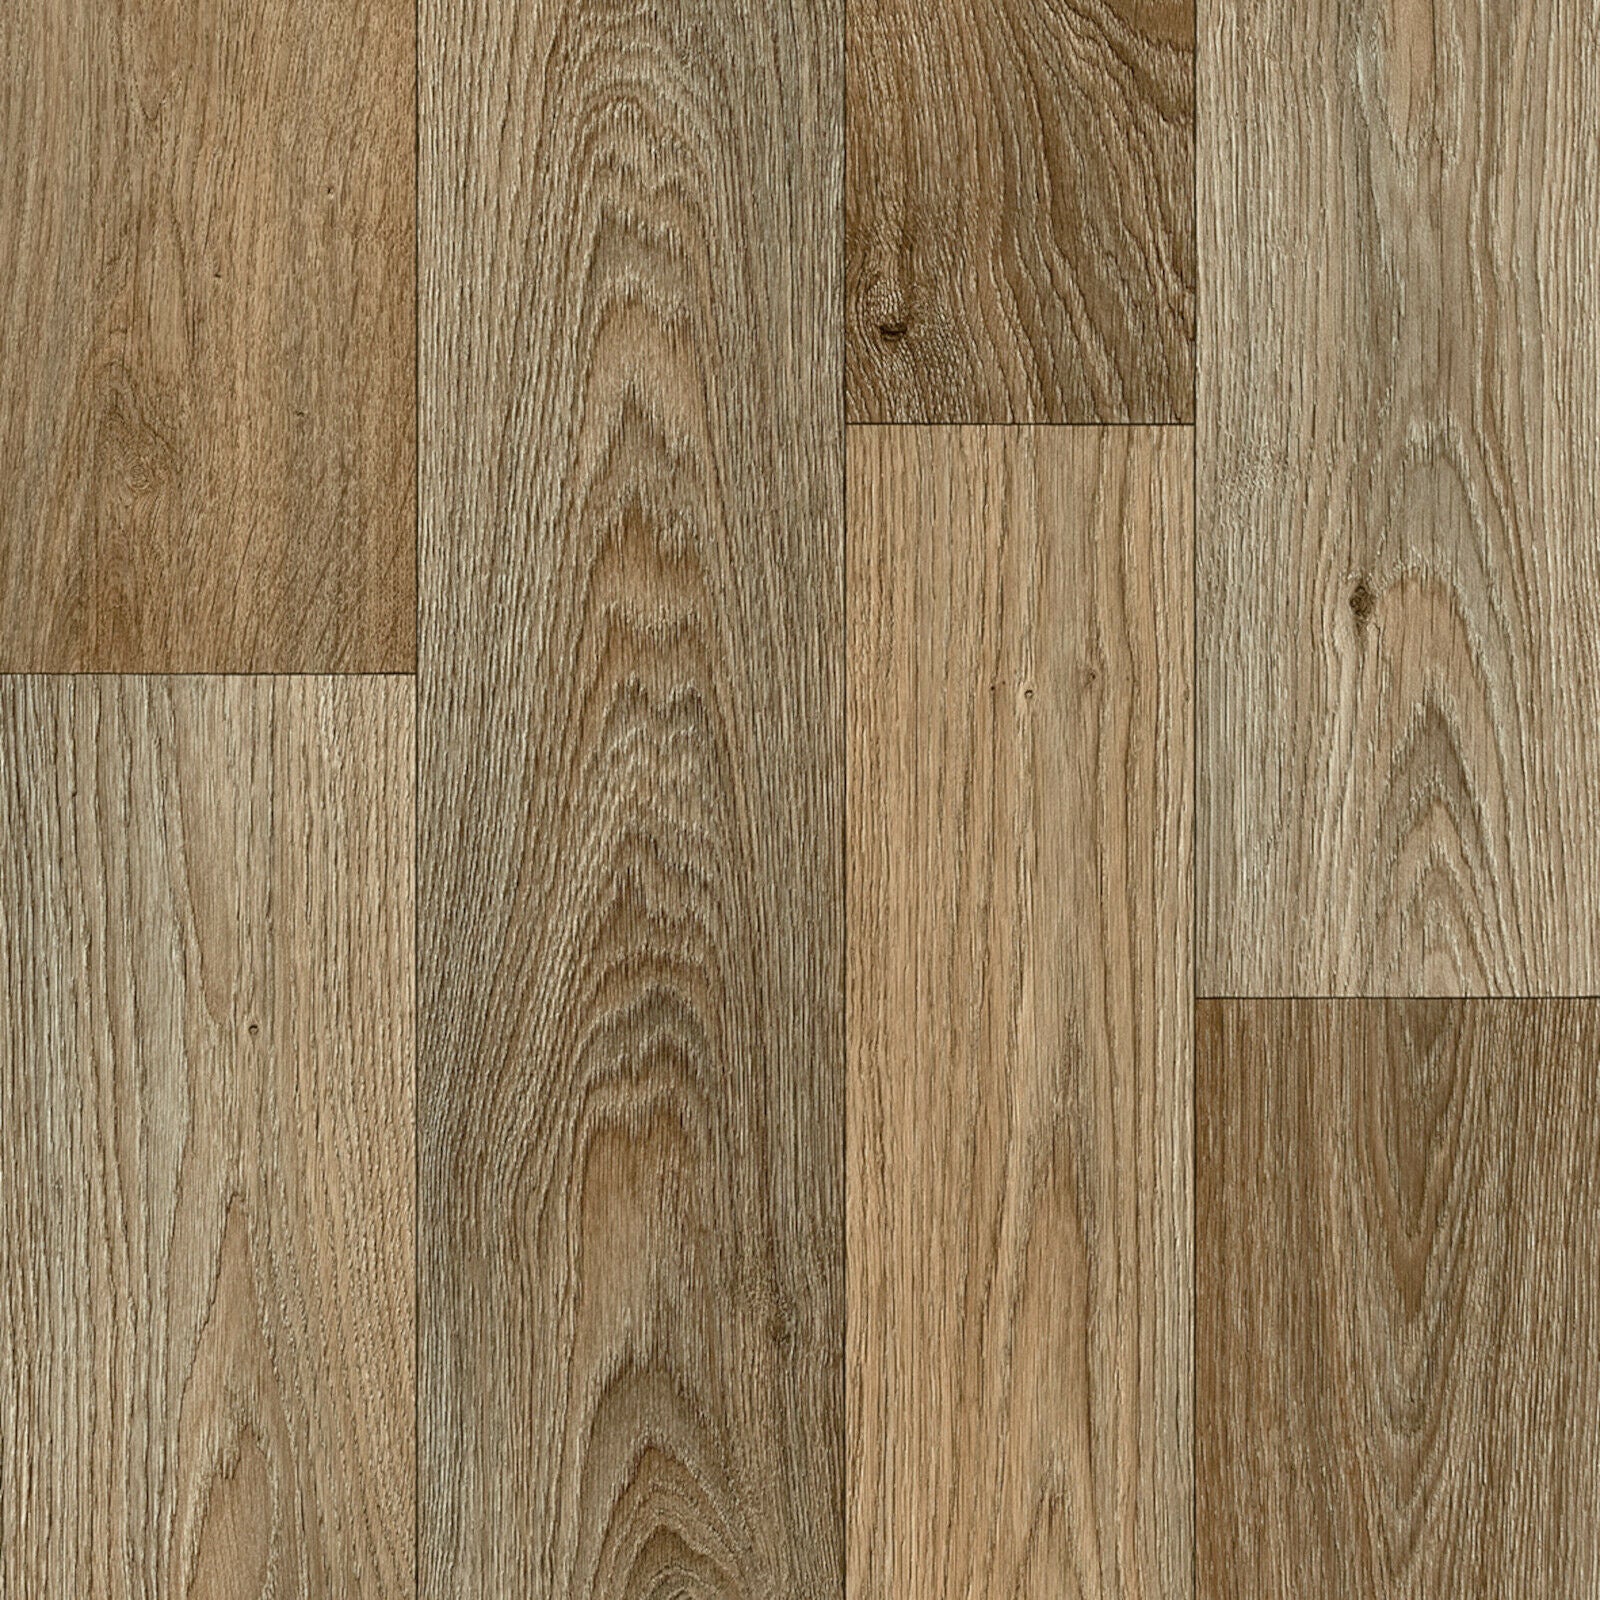 Random Sized Brown Wood Plank Style Primo Vinyl Flooring